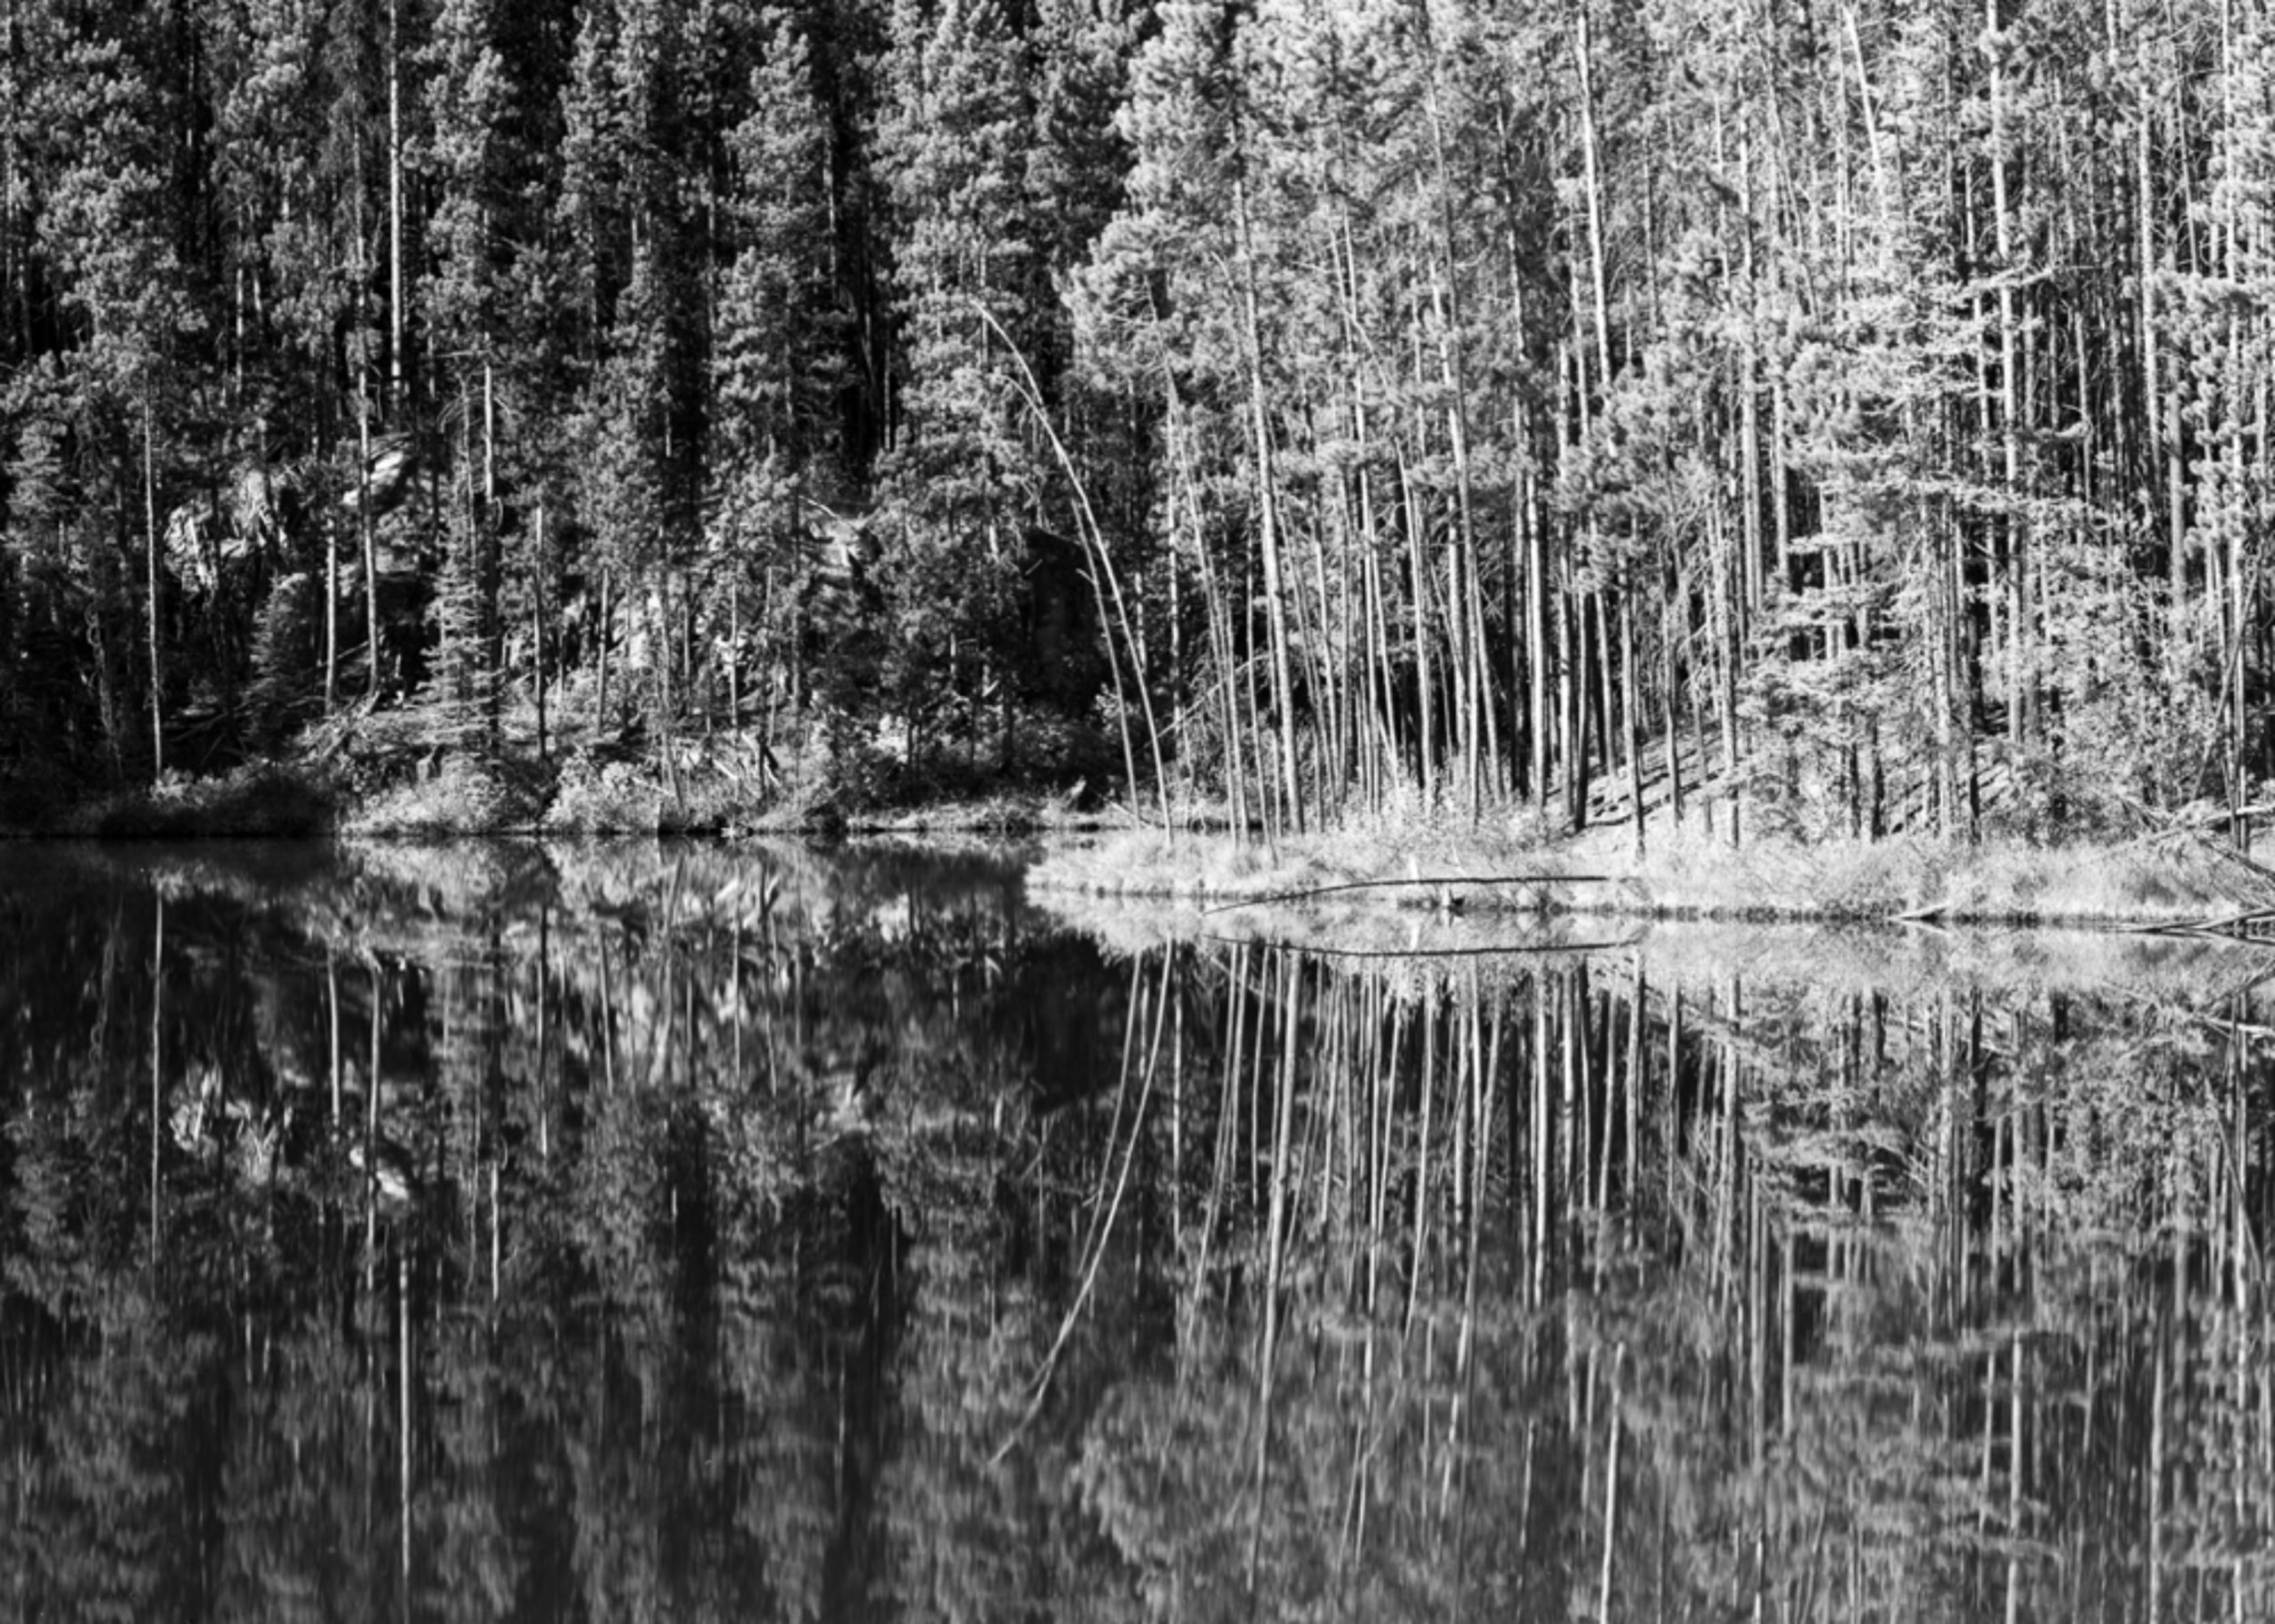 560.  Herbert Lake Reflections